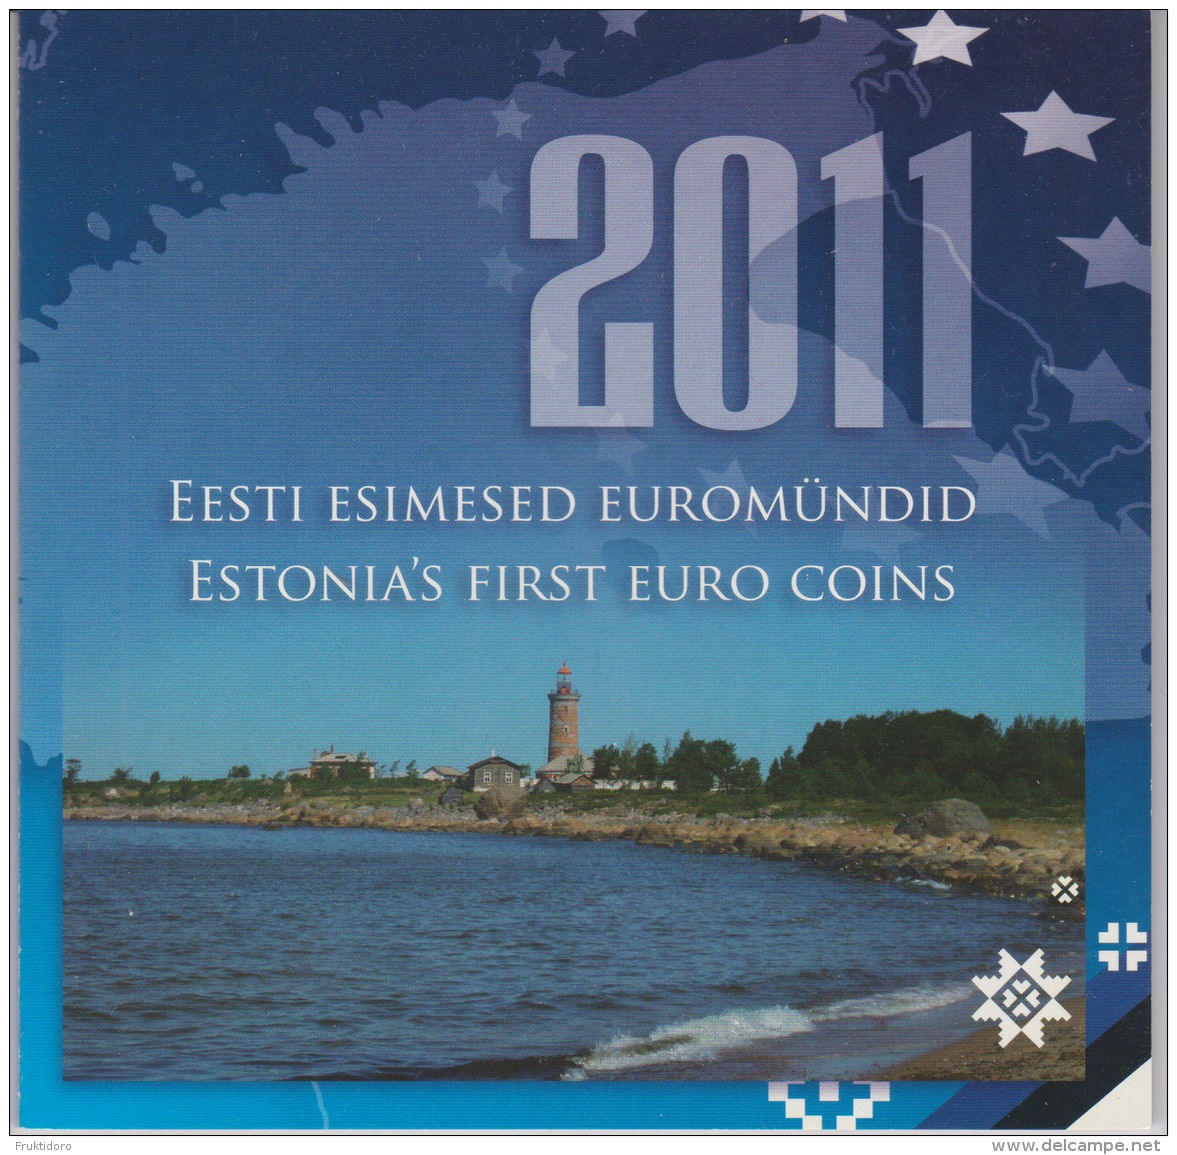 Coin Estonia Coinage 2011 / II 0.01 - 2  Euro UNC - Estonia's First Euro Coins - Estland